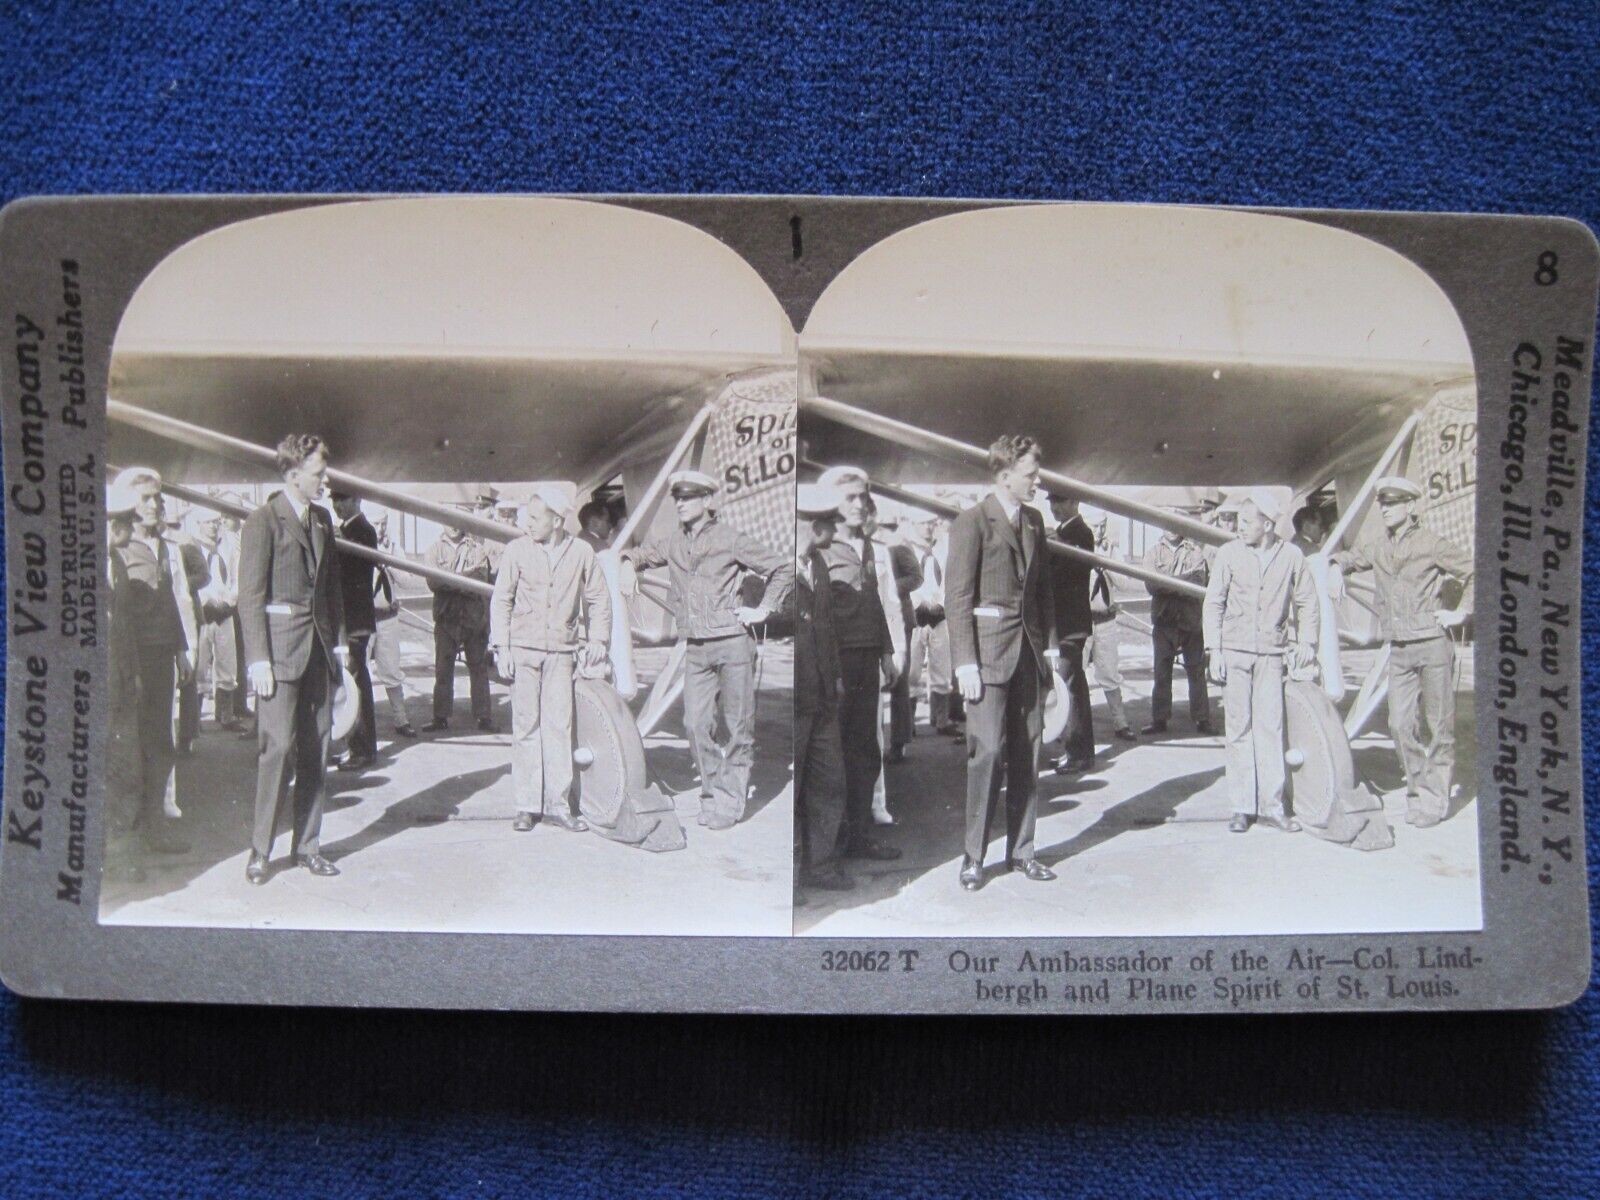 ORIGINAL B&W STEREOSCOPIC PHOTO of CHARLES LINDBERGH & SPIRIT OF ST LOUIS